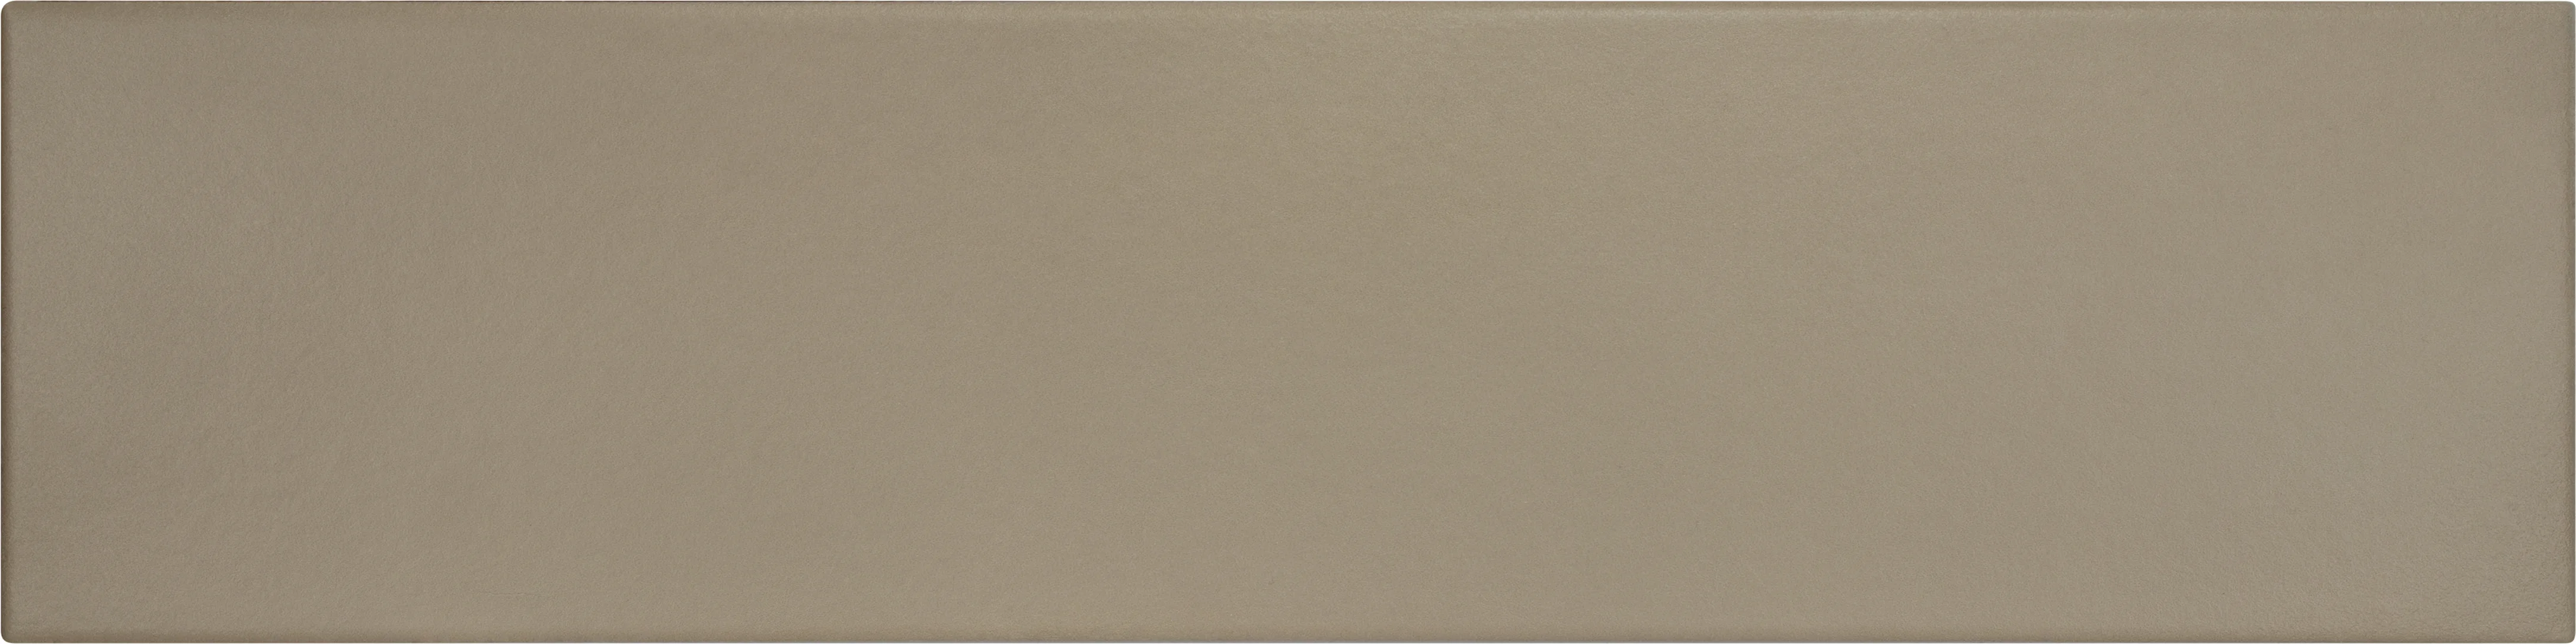 Equipe Stromboli Savasana 9,2x36,8 cm